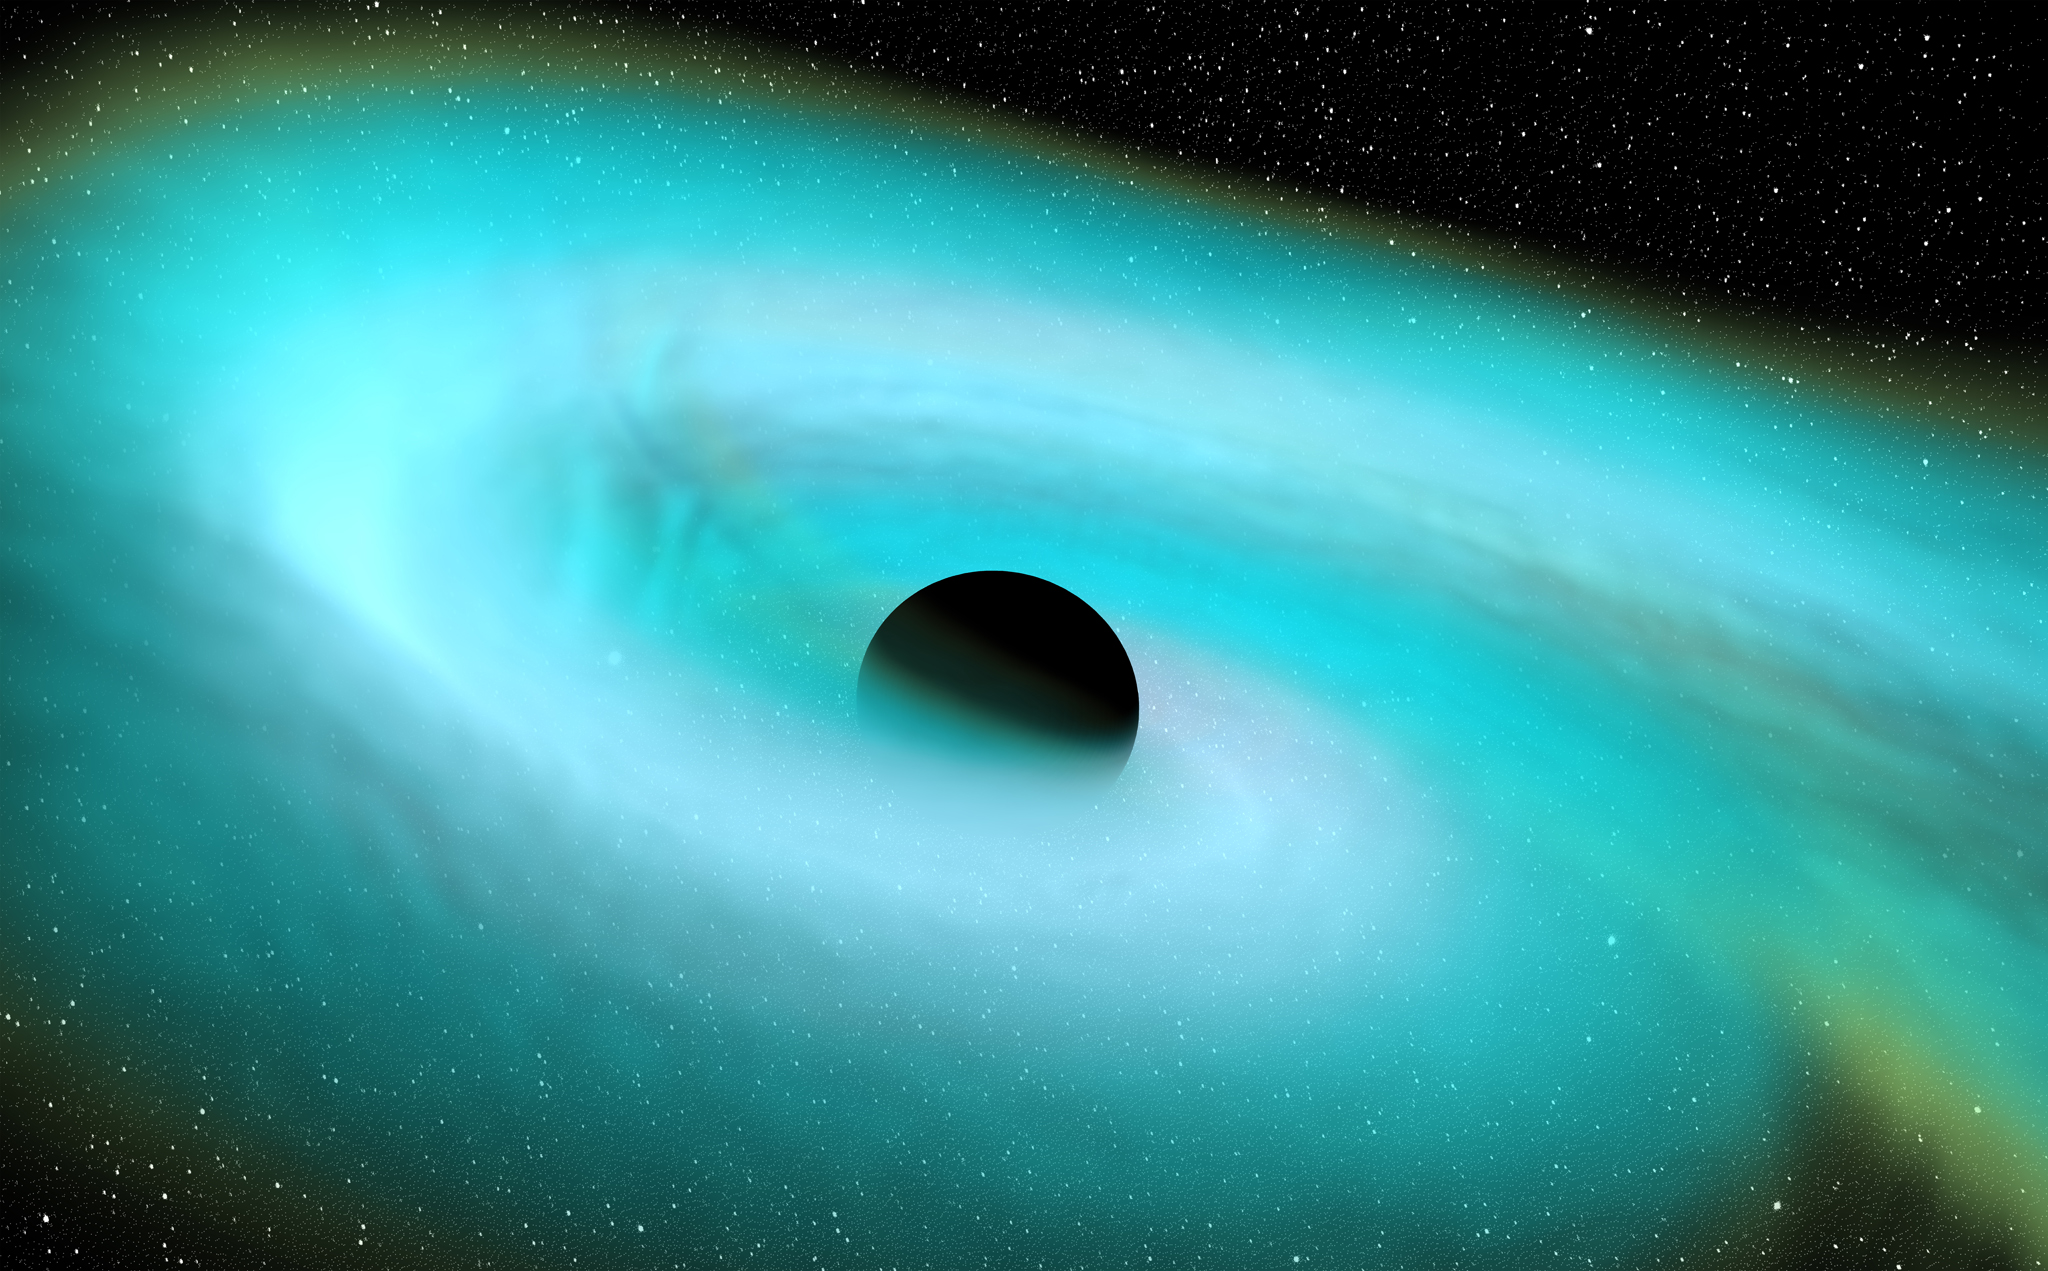 neutron-star black-hole merger visualization